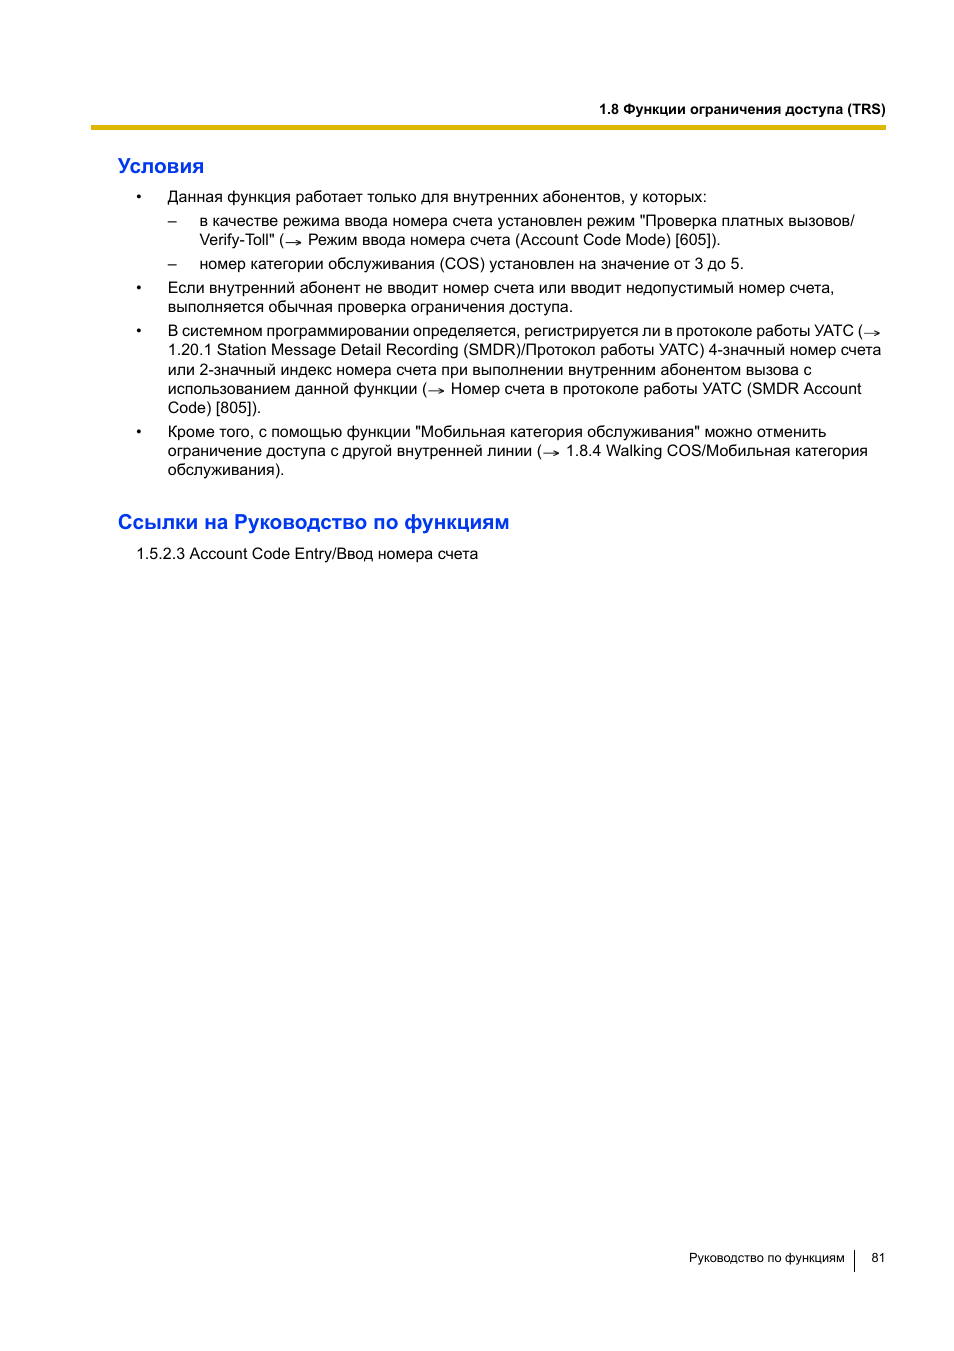 Условия, Ссылки на руководство по функциям | Инструкция по эксплуатации Panasonic KX-TEA308RU | Страница 81 / 318